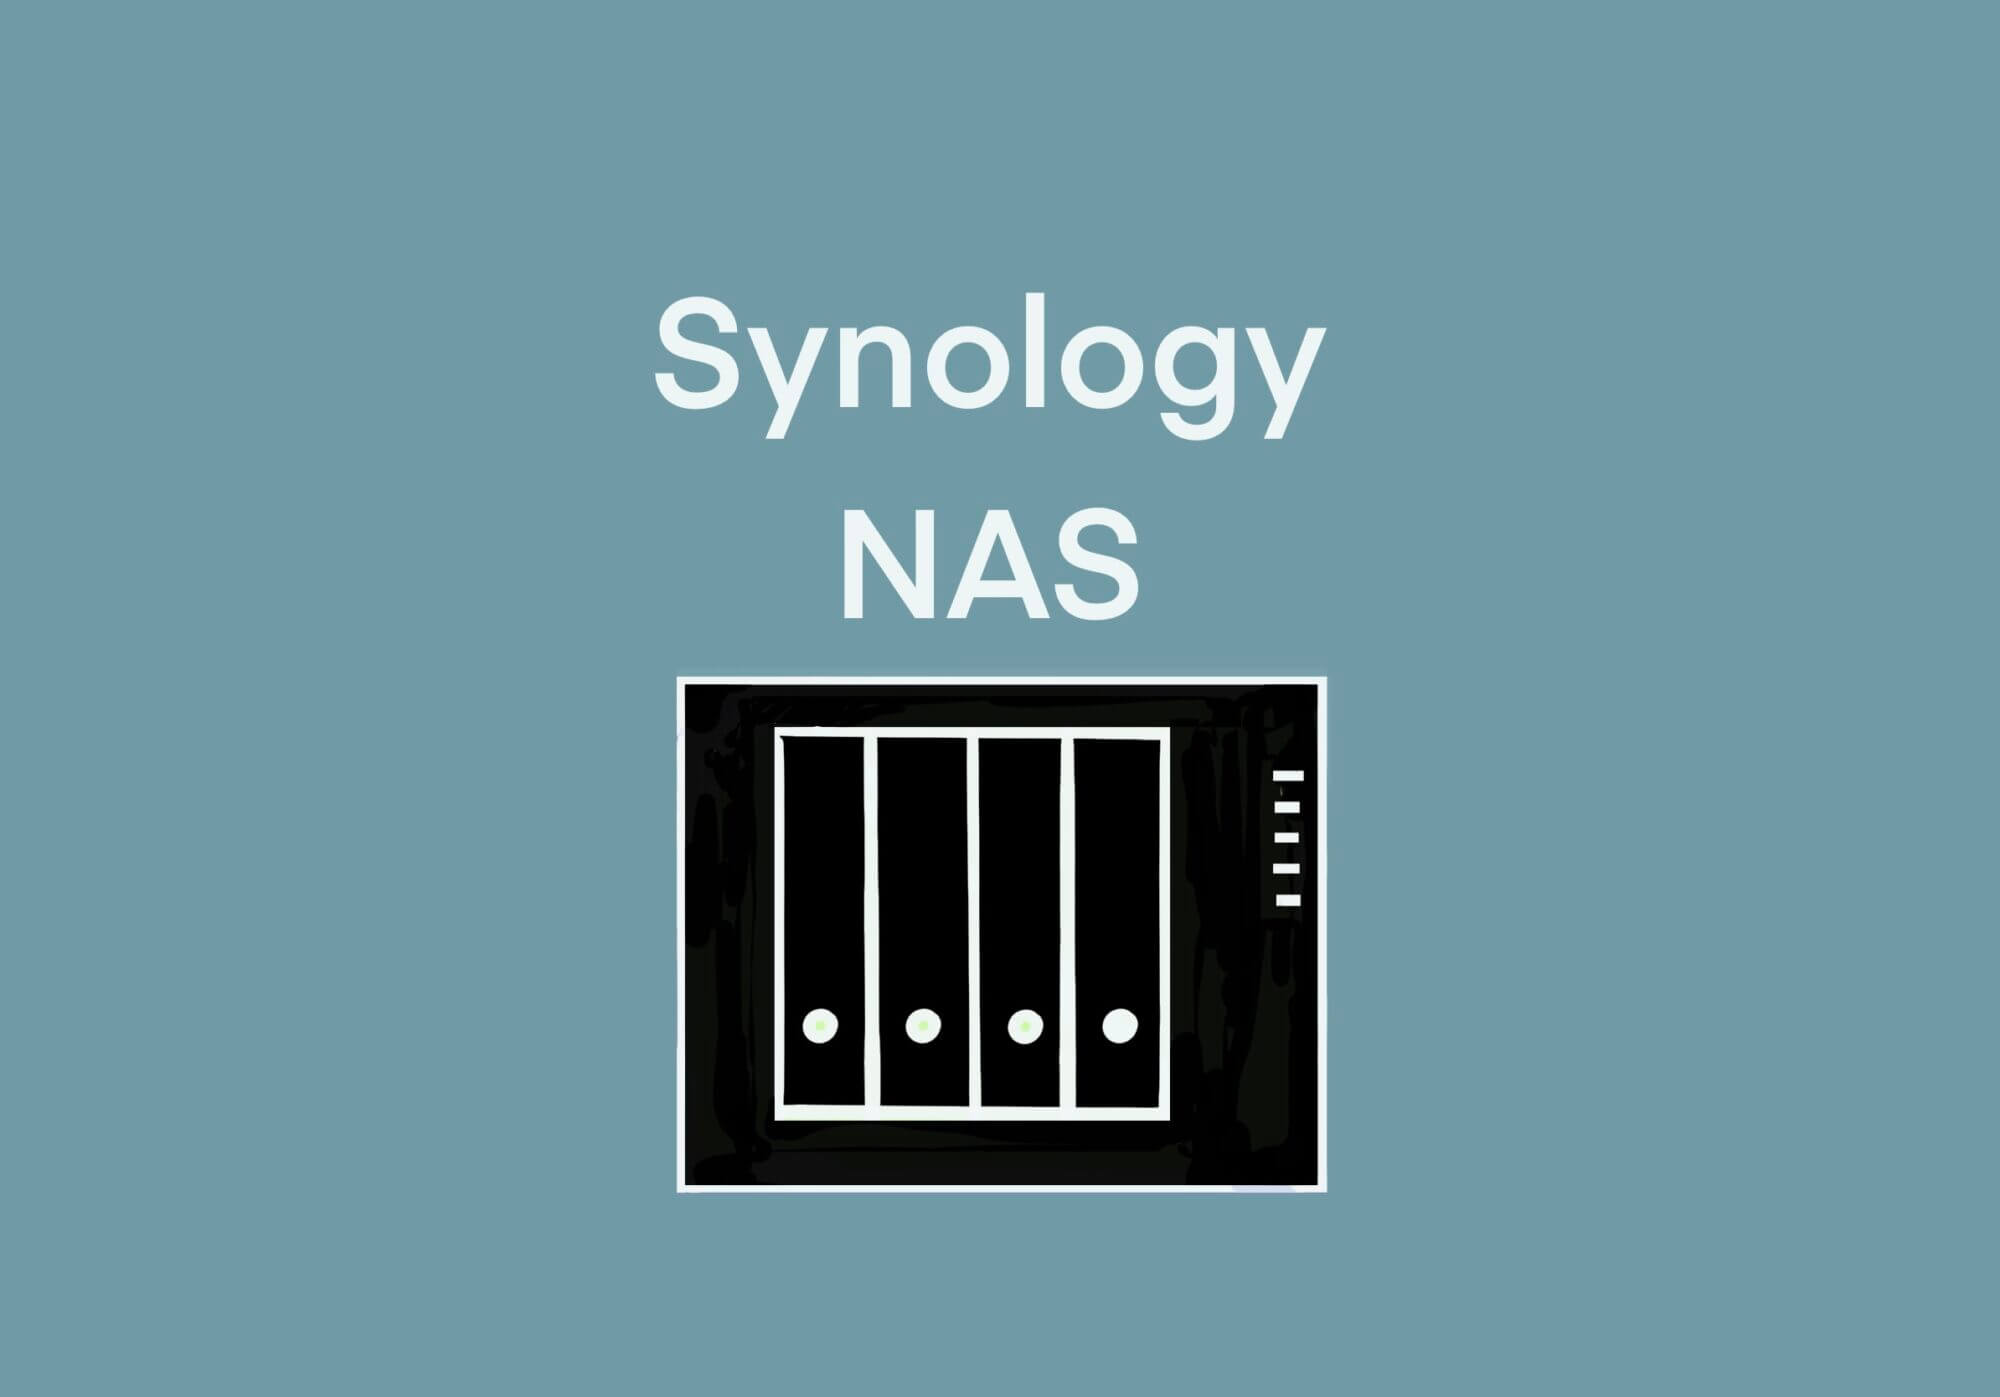 [Synology] NASのセキュリティを強化する方法のリンク ID8870